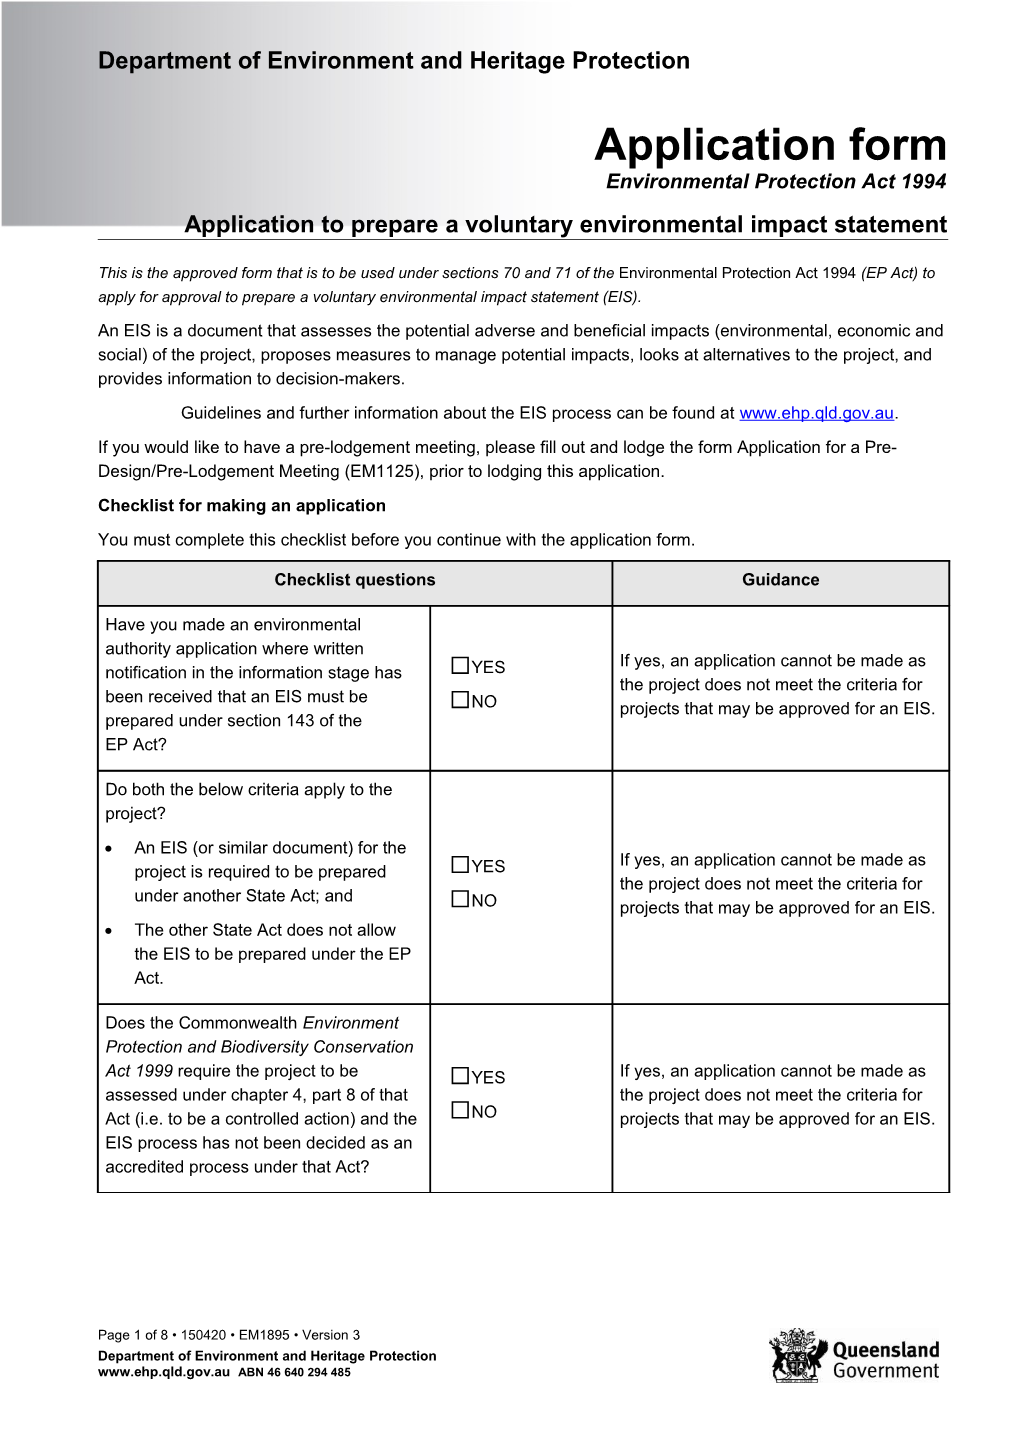 Application to Prepare a Voluntary Environmental Impact Statement EM1895